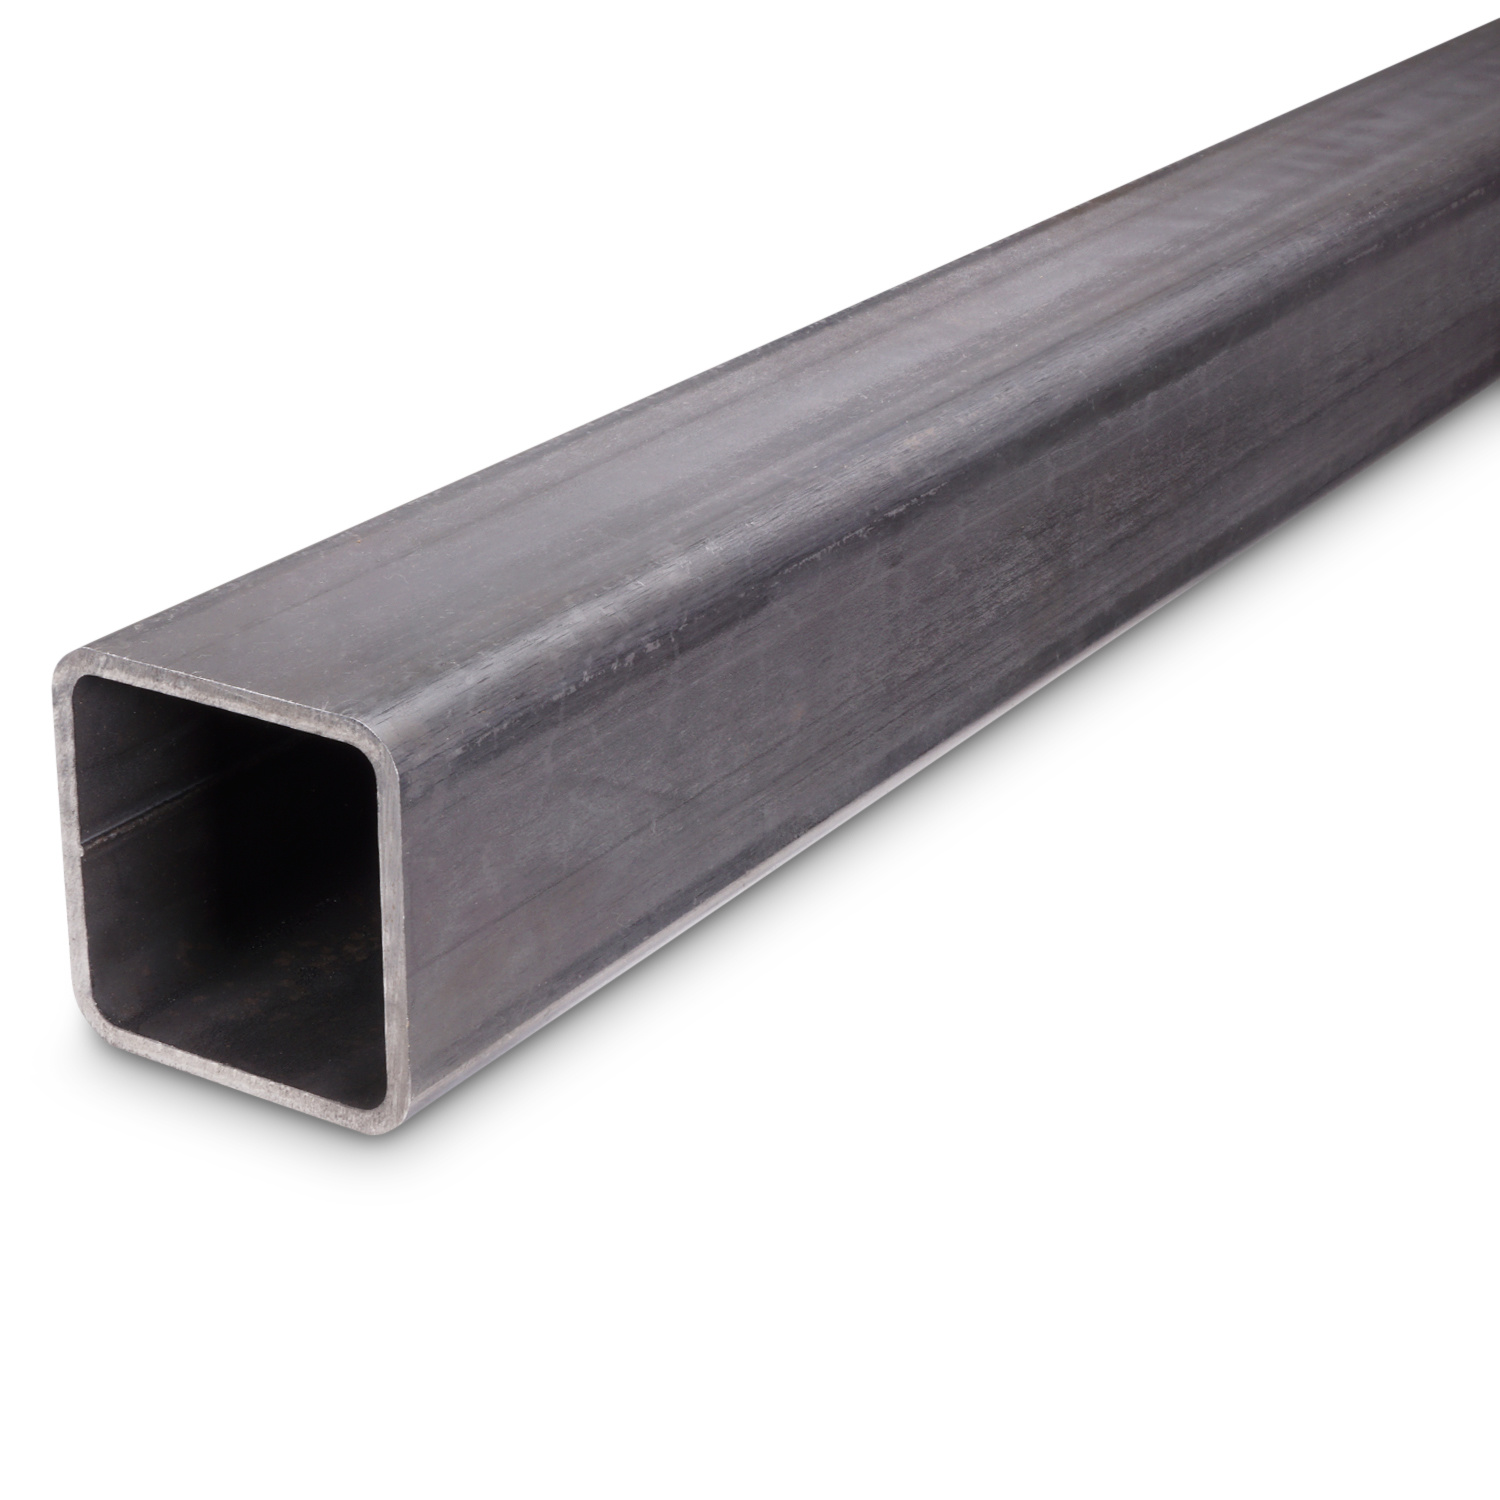  Koker staal - vierkante buis kokerprofiel KGV staal - S235JR - 120x120x3 MM